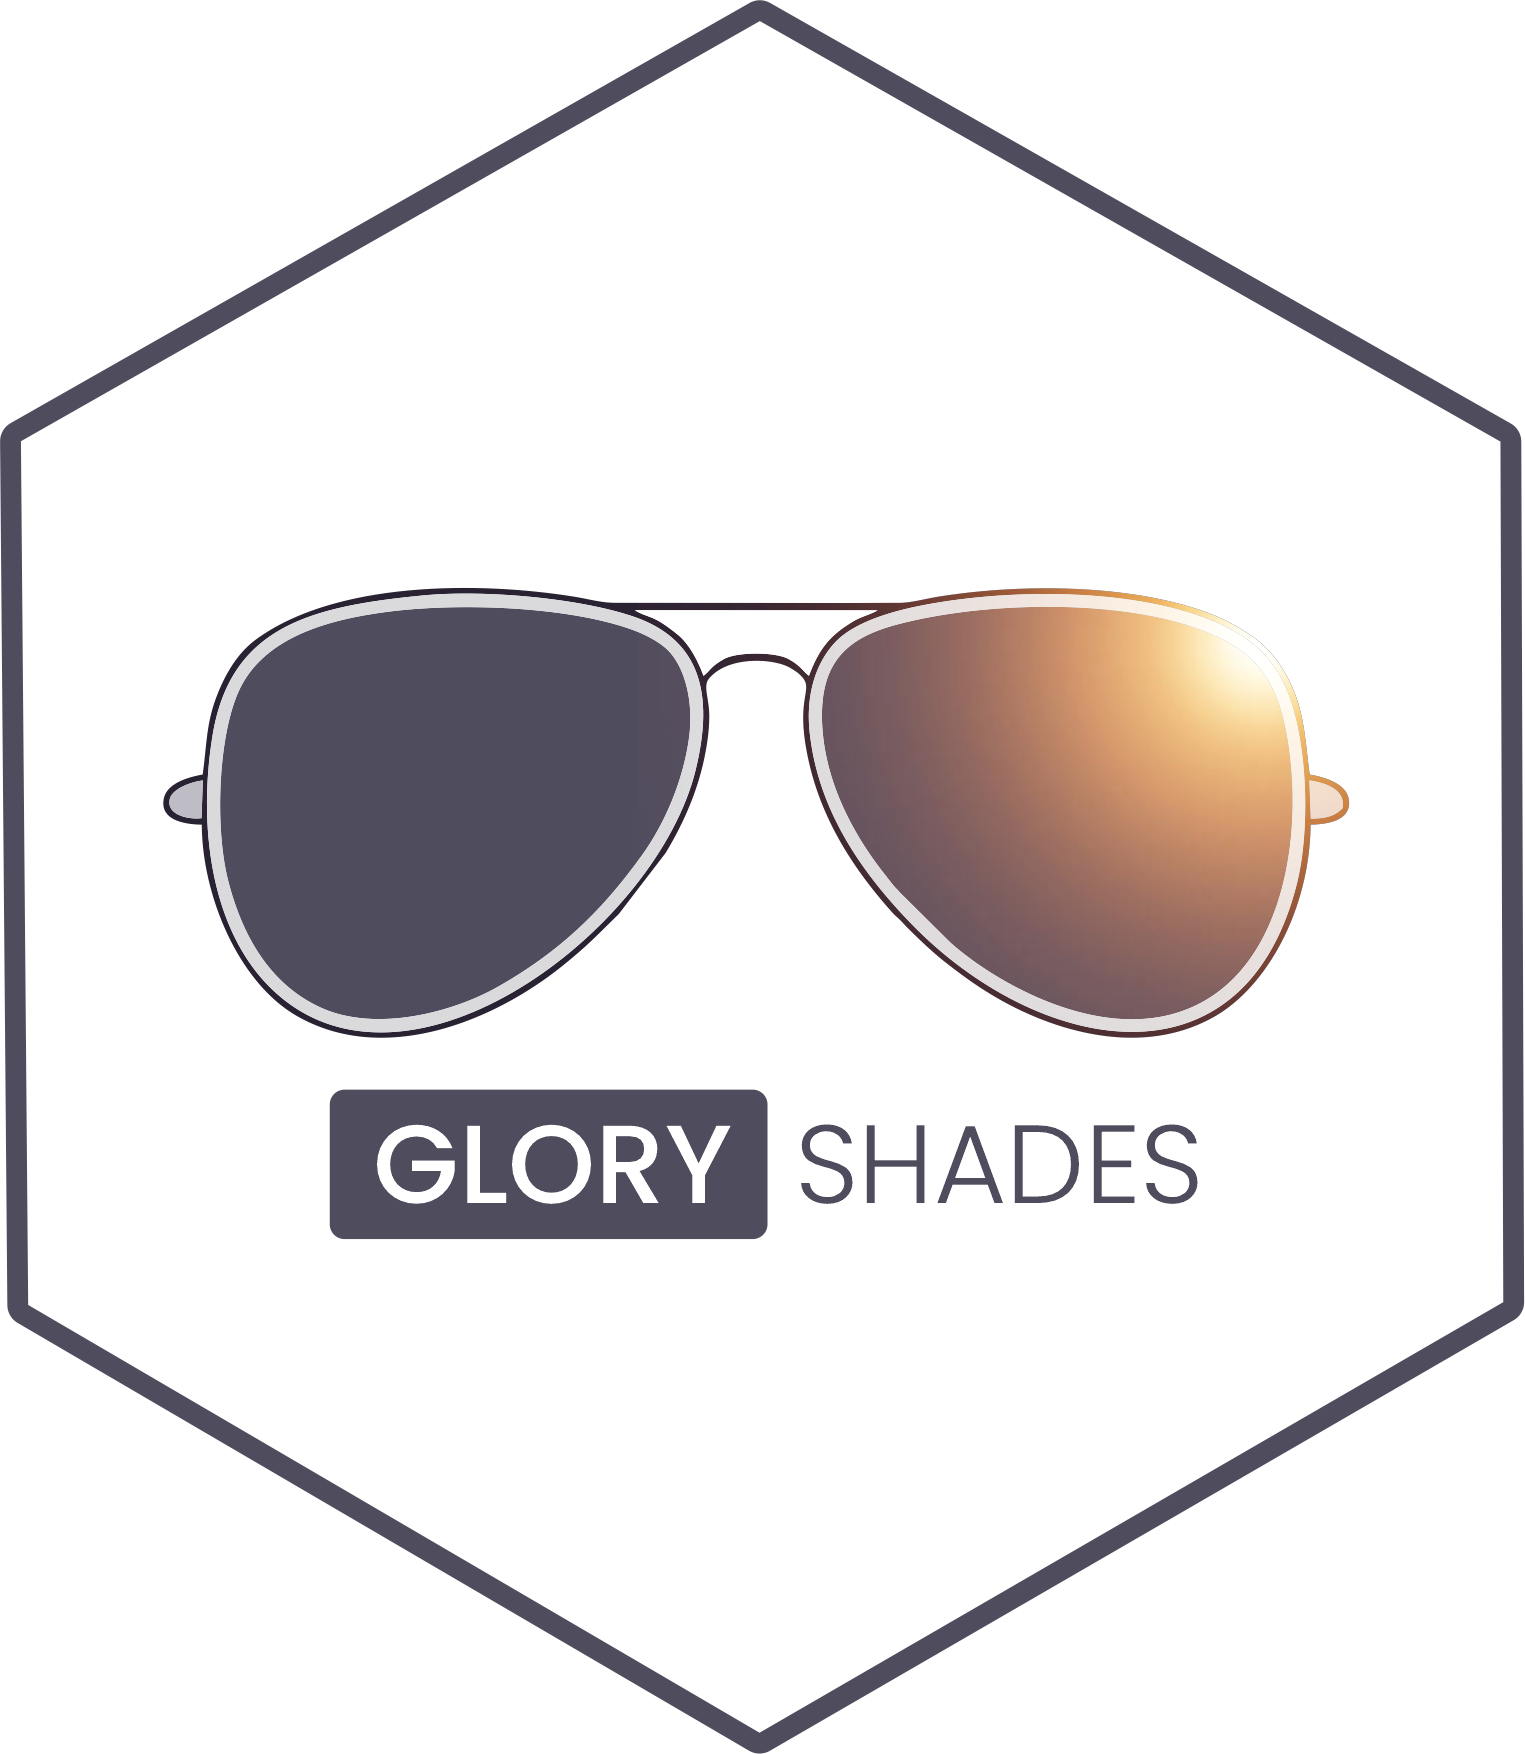 Glory shades